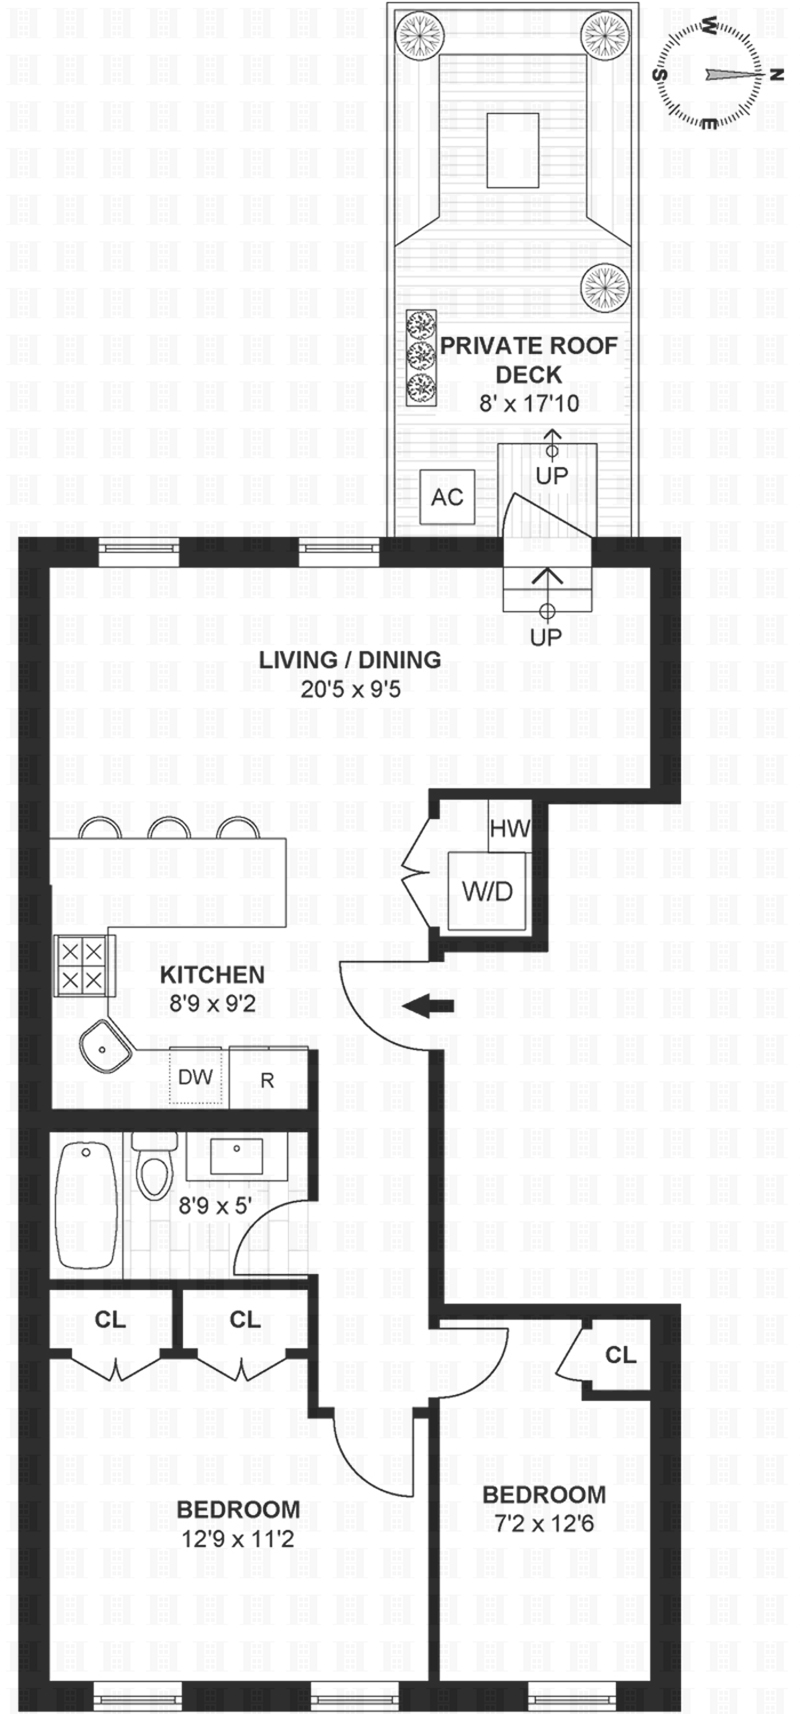 Floorplan for 736 Garden St, 3